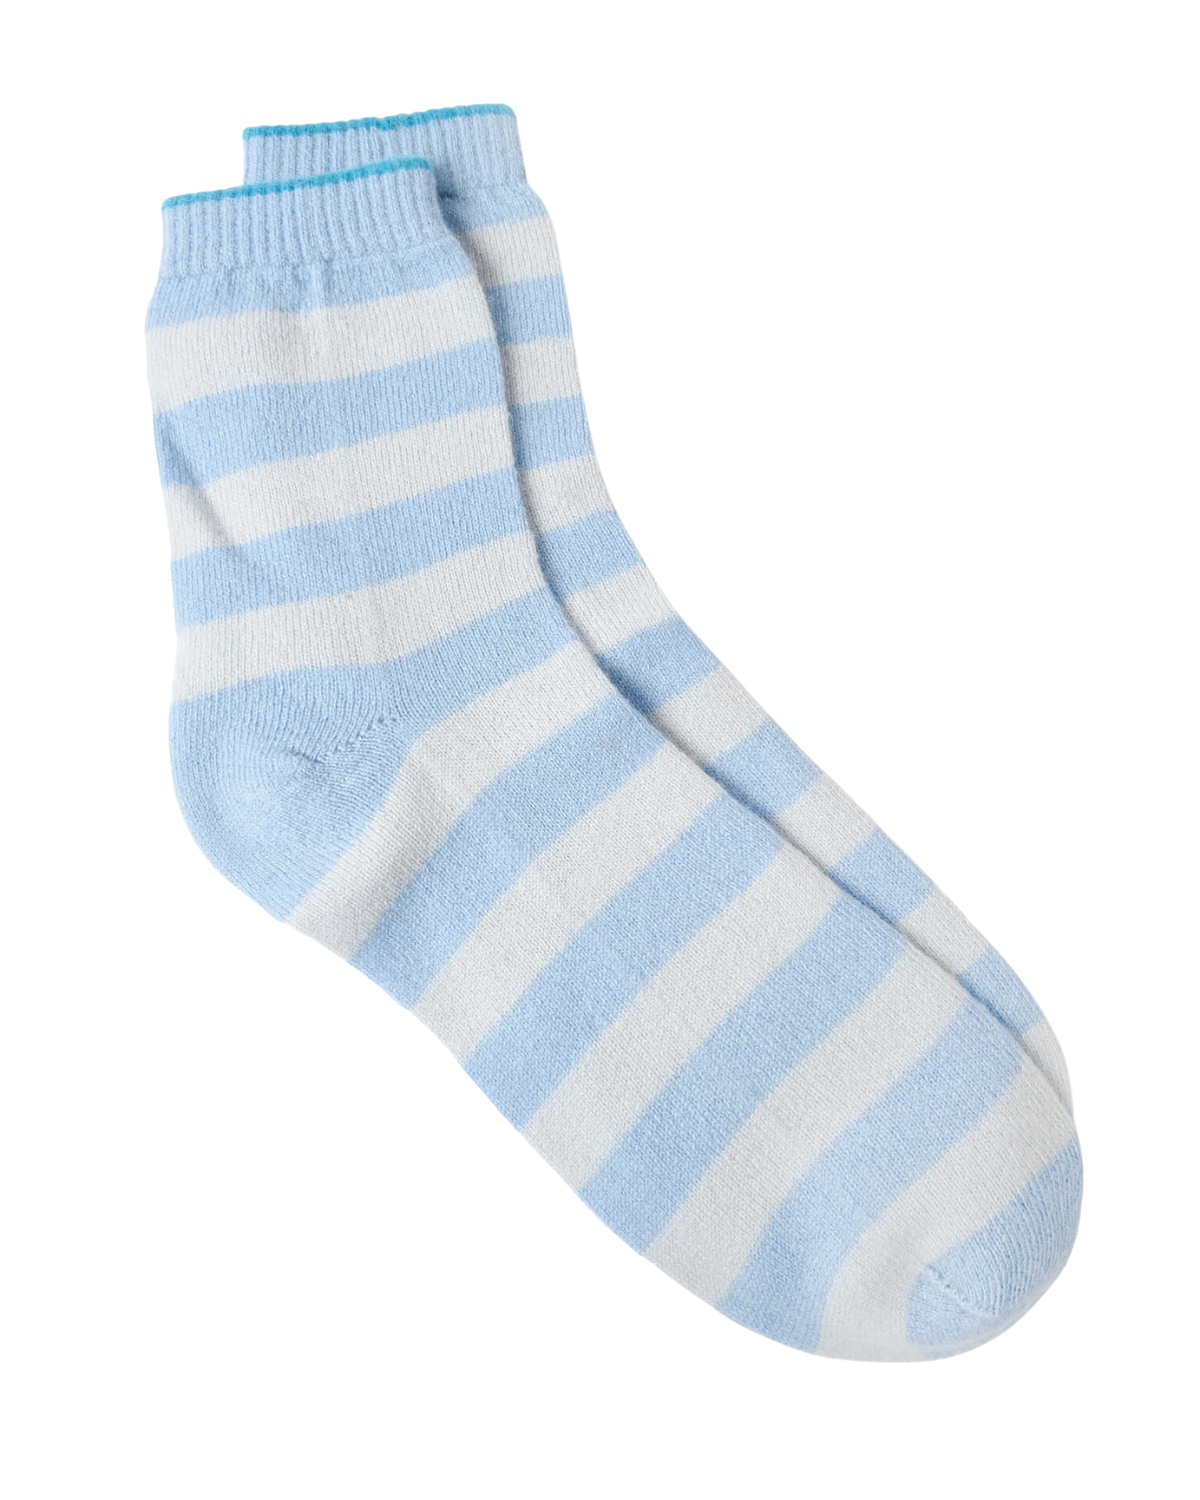 Stripe Socks (Wedgewood/Cement)